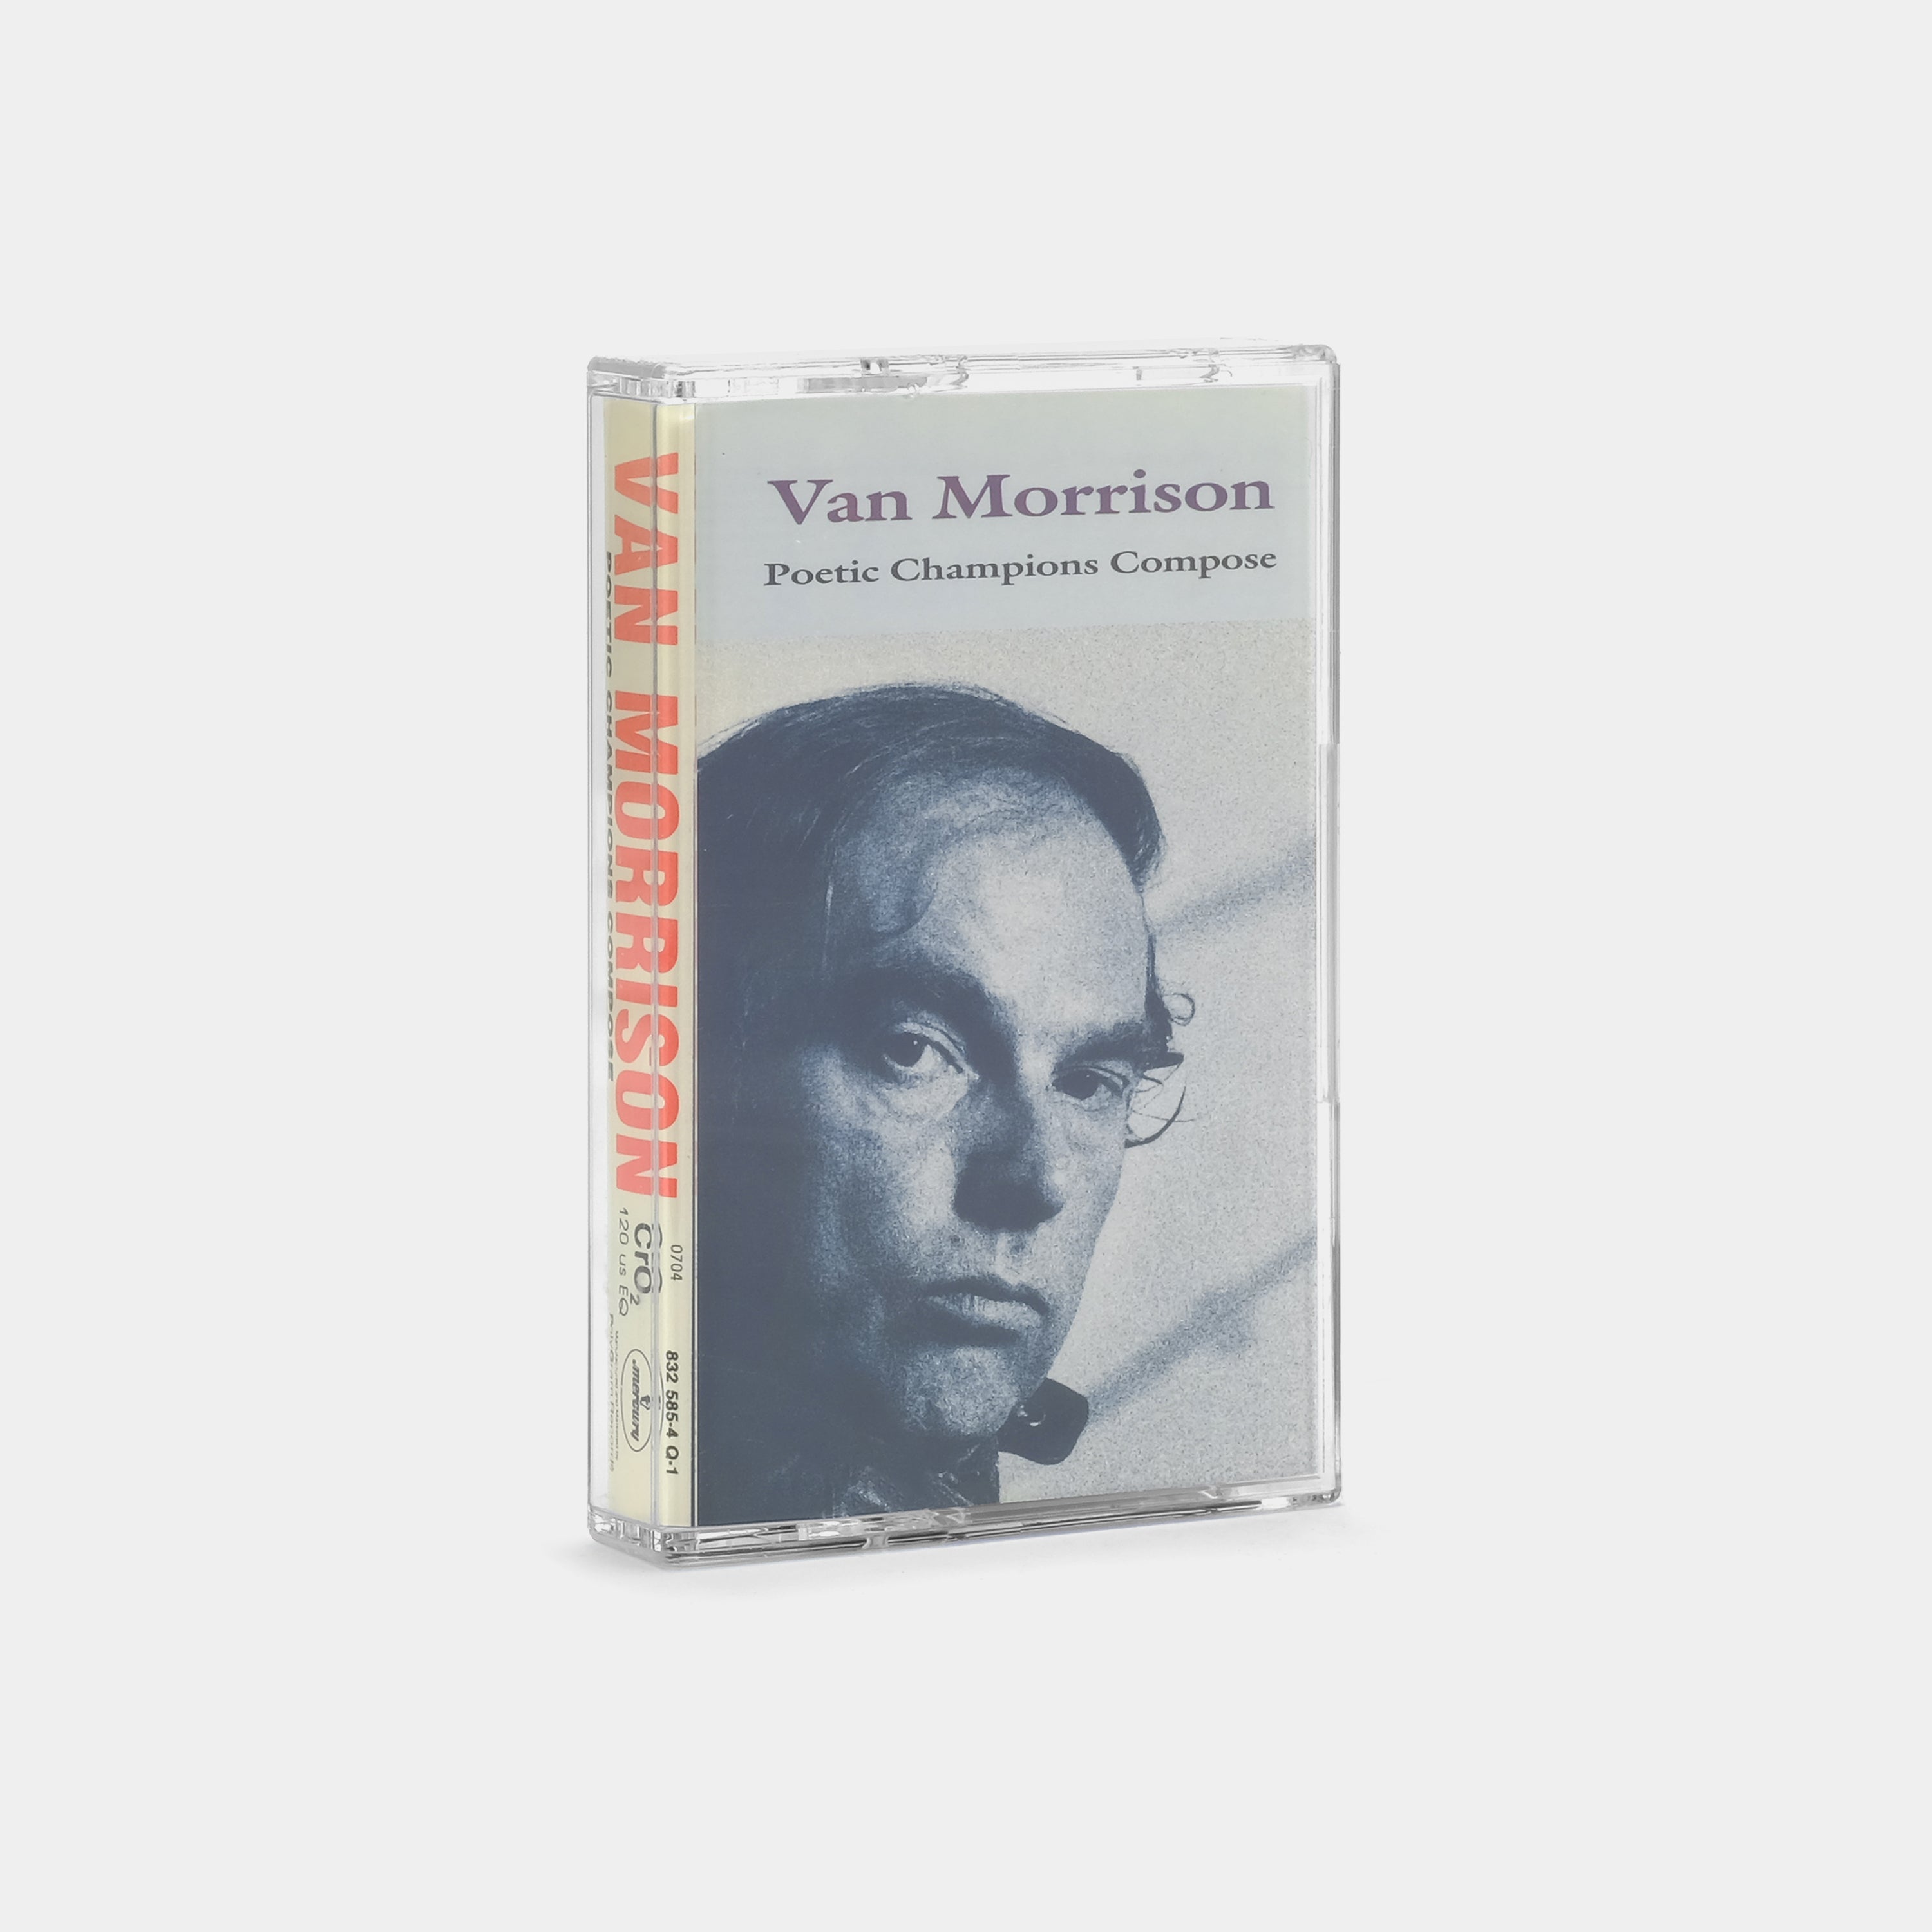 Van Morrison - Poetic Champions Compose Cassette Tape